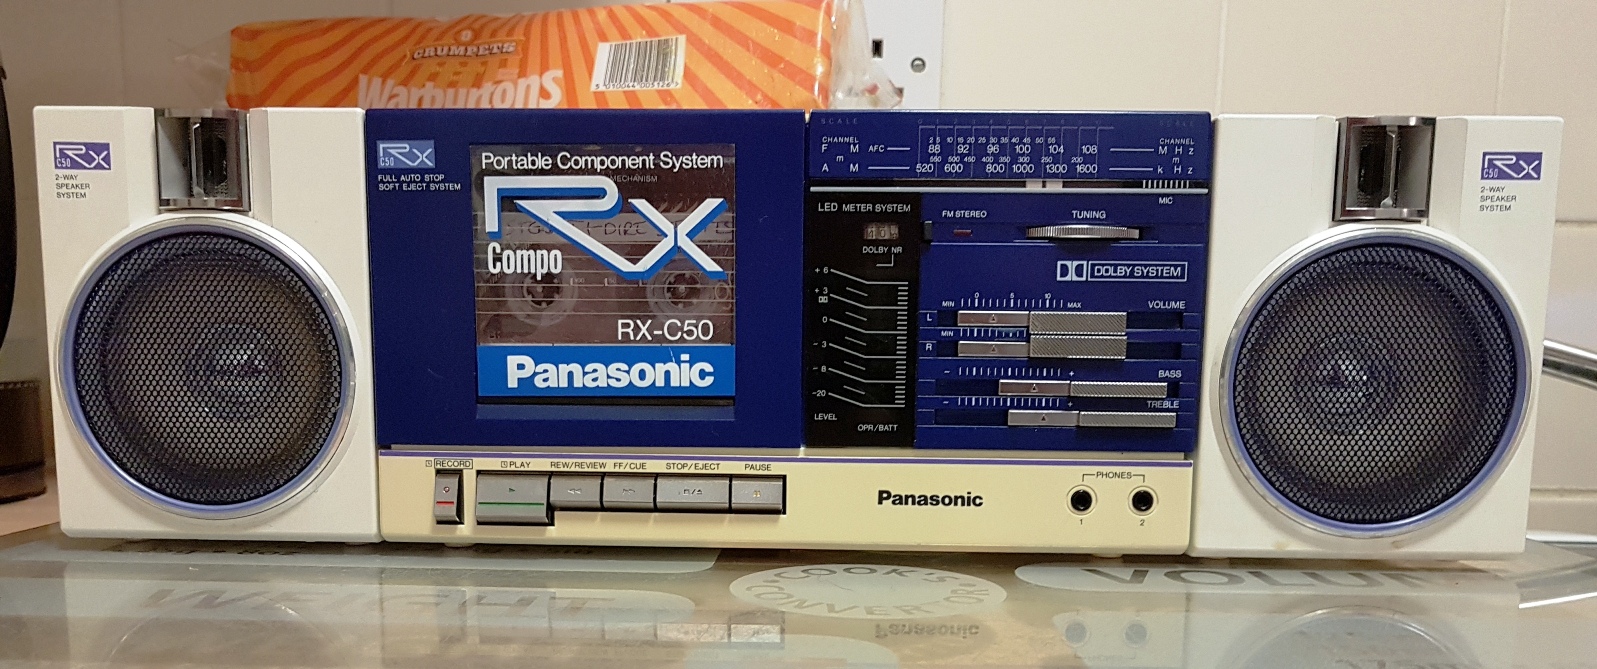 Panasonic RX-C50 Radio Cassette Recorder - March 2018 (1).jpg